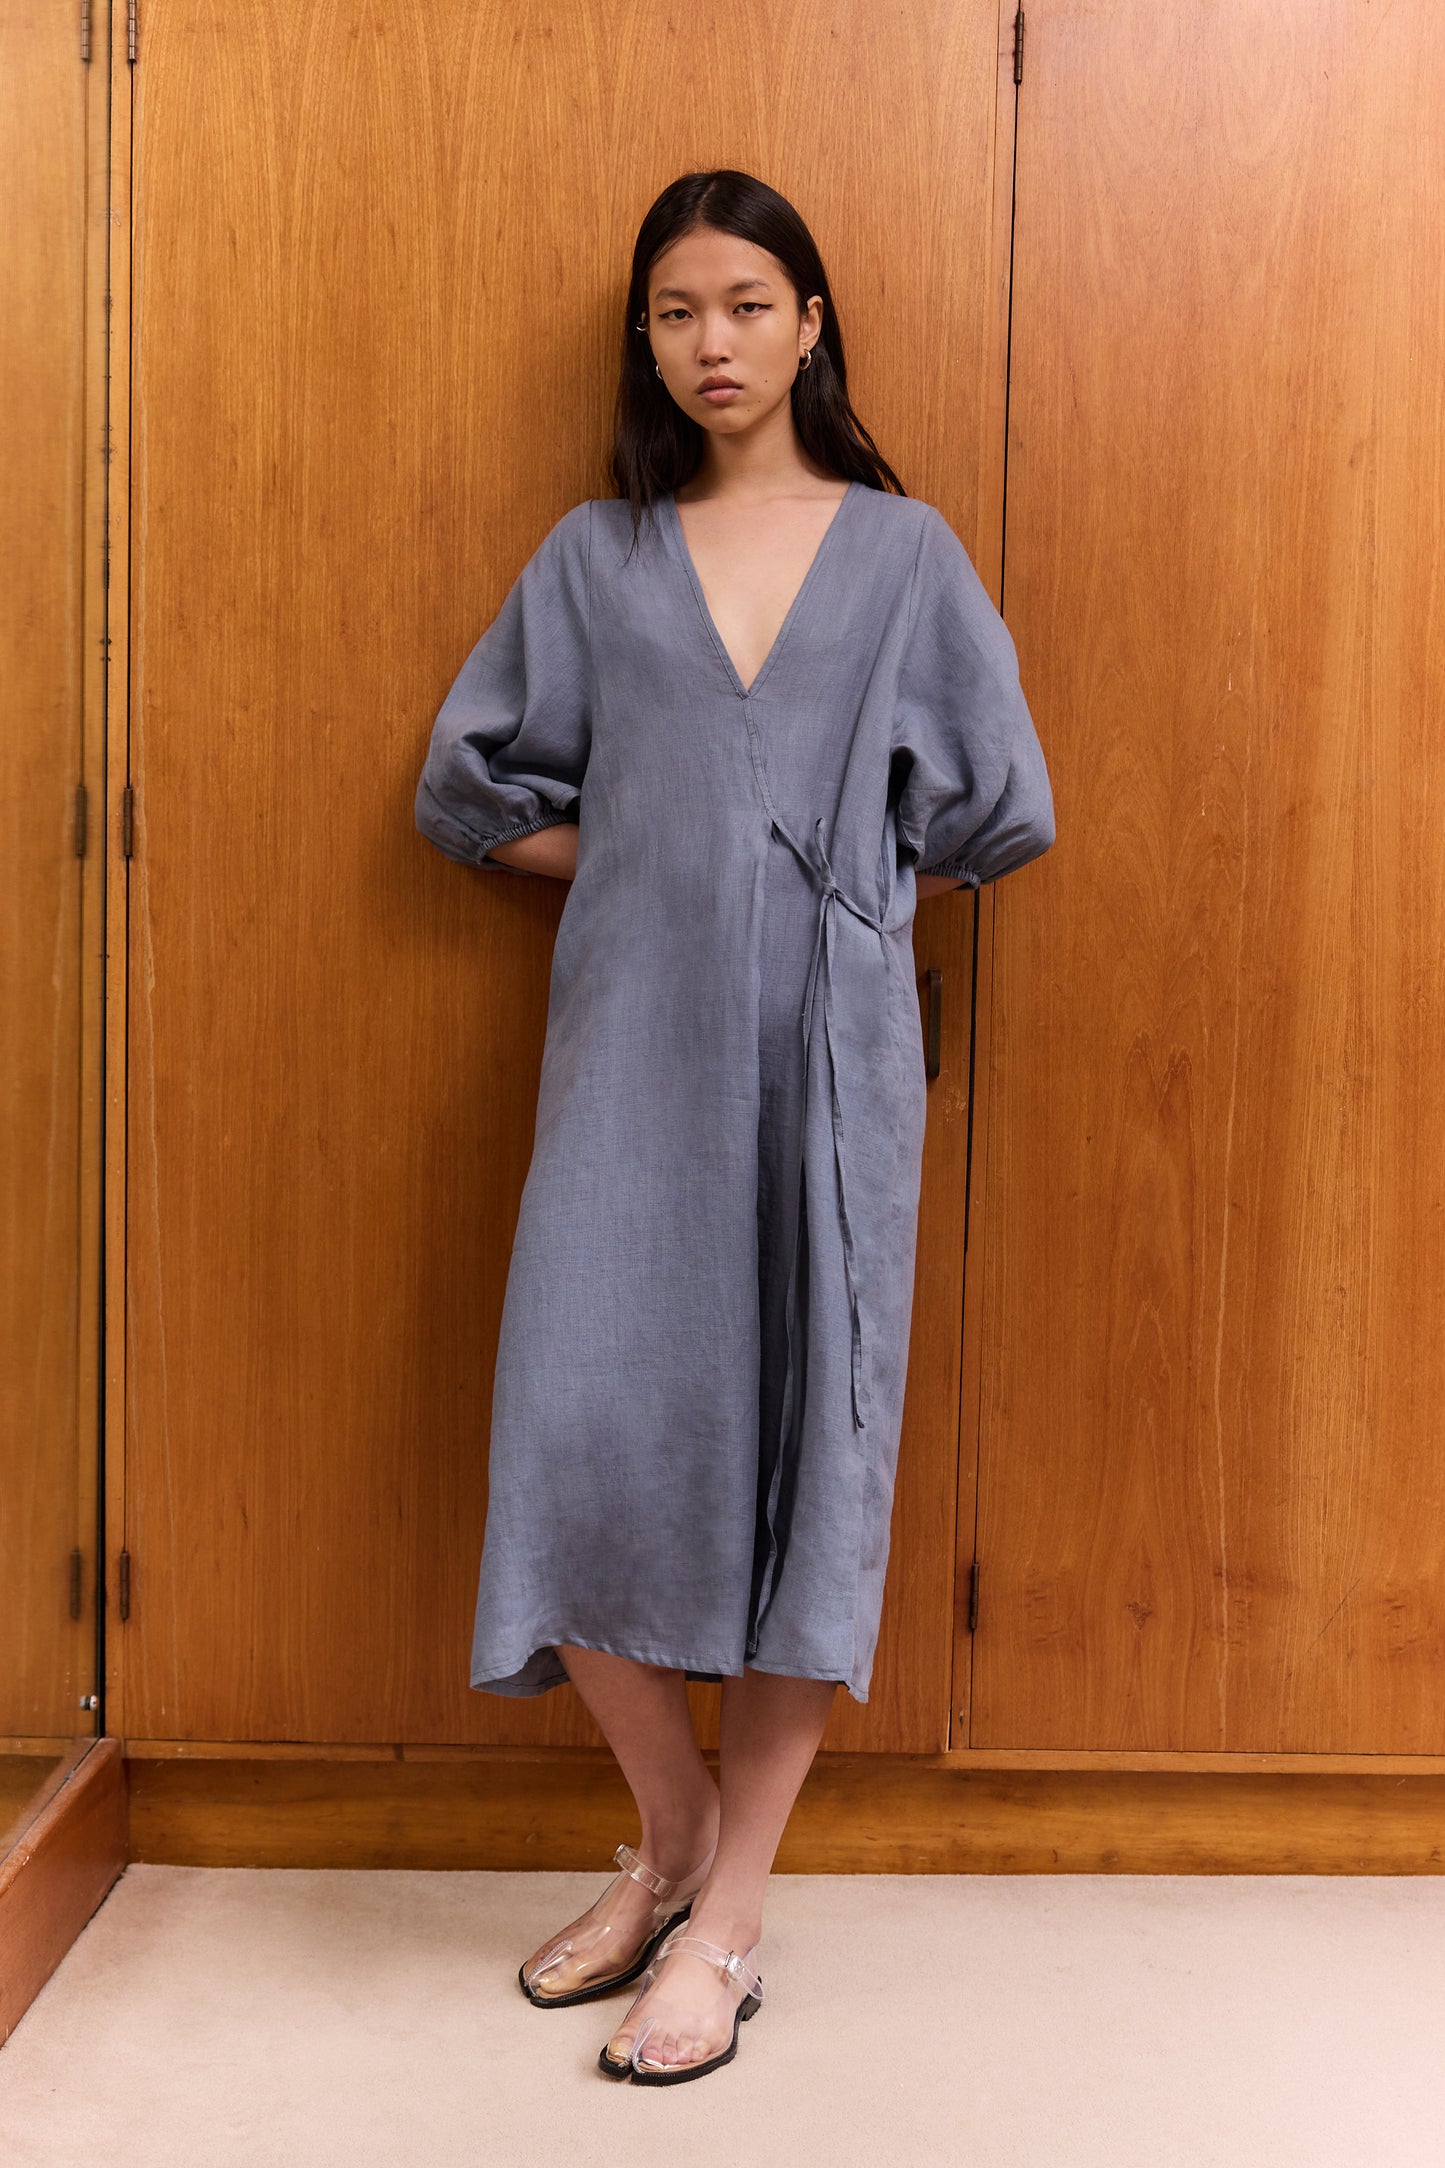 Female model wearing The Crease Bind Dress - Air by Deiji Studios against plain background